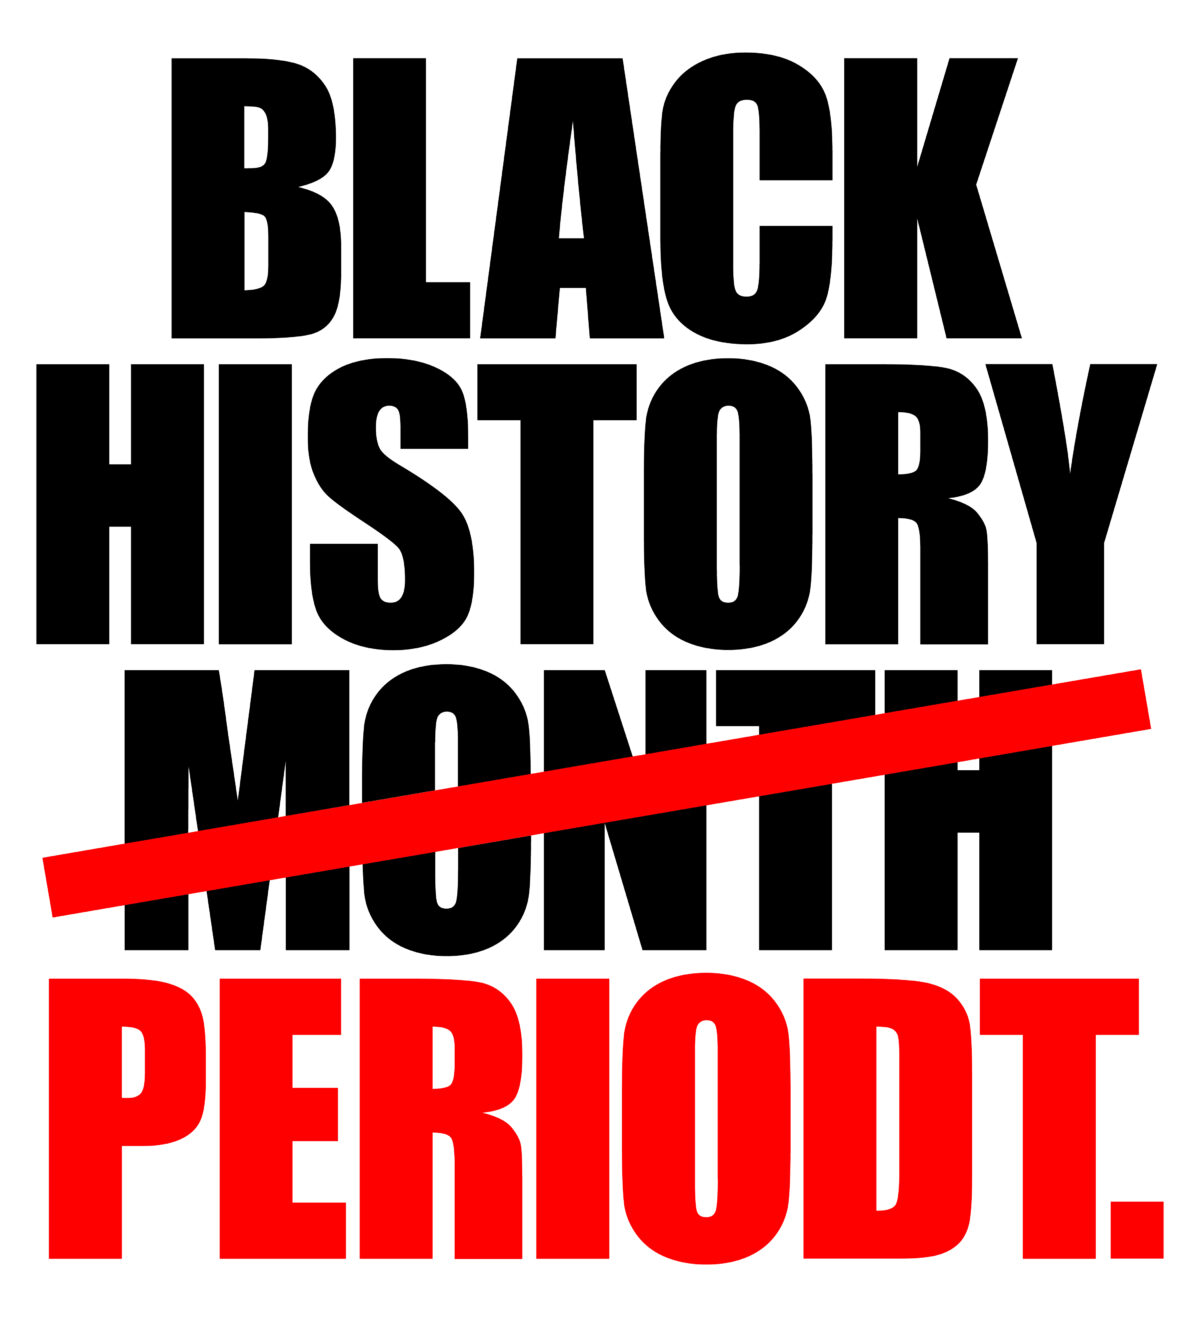 Black history month periodt Svg